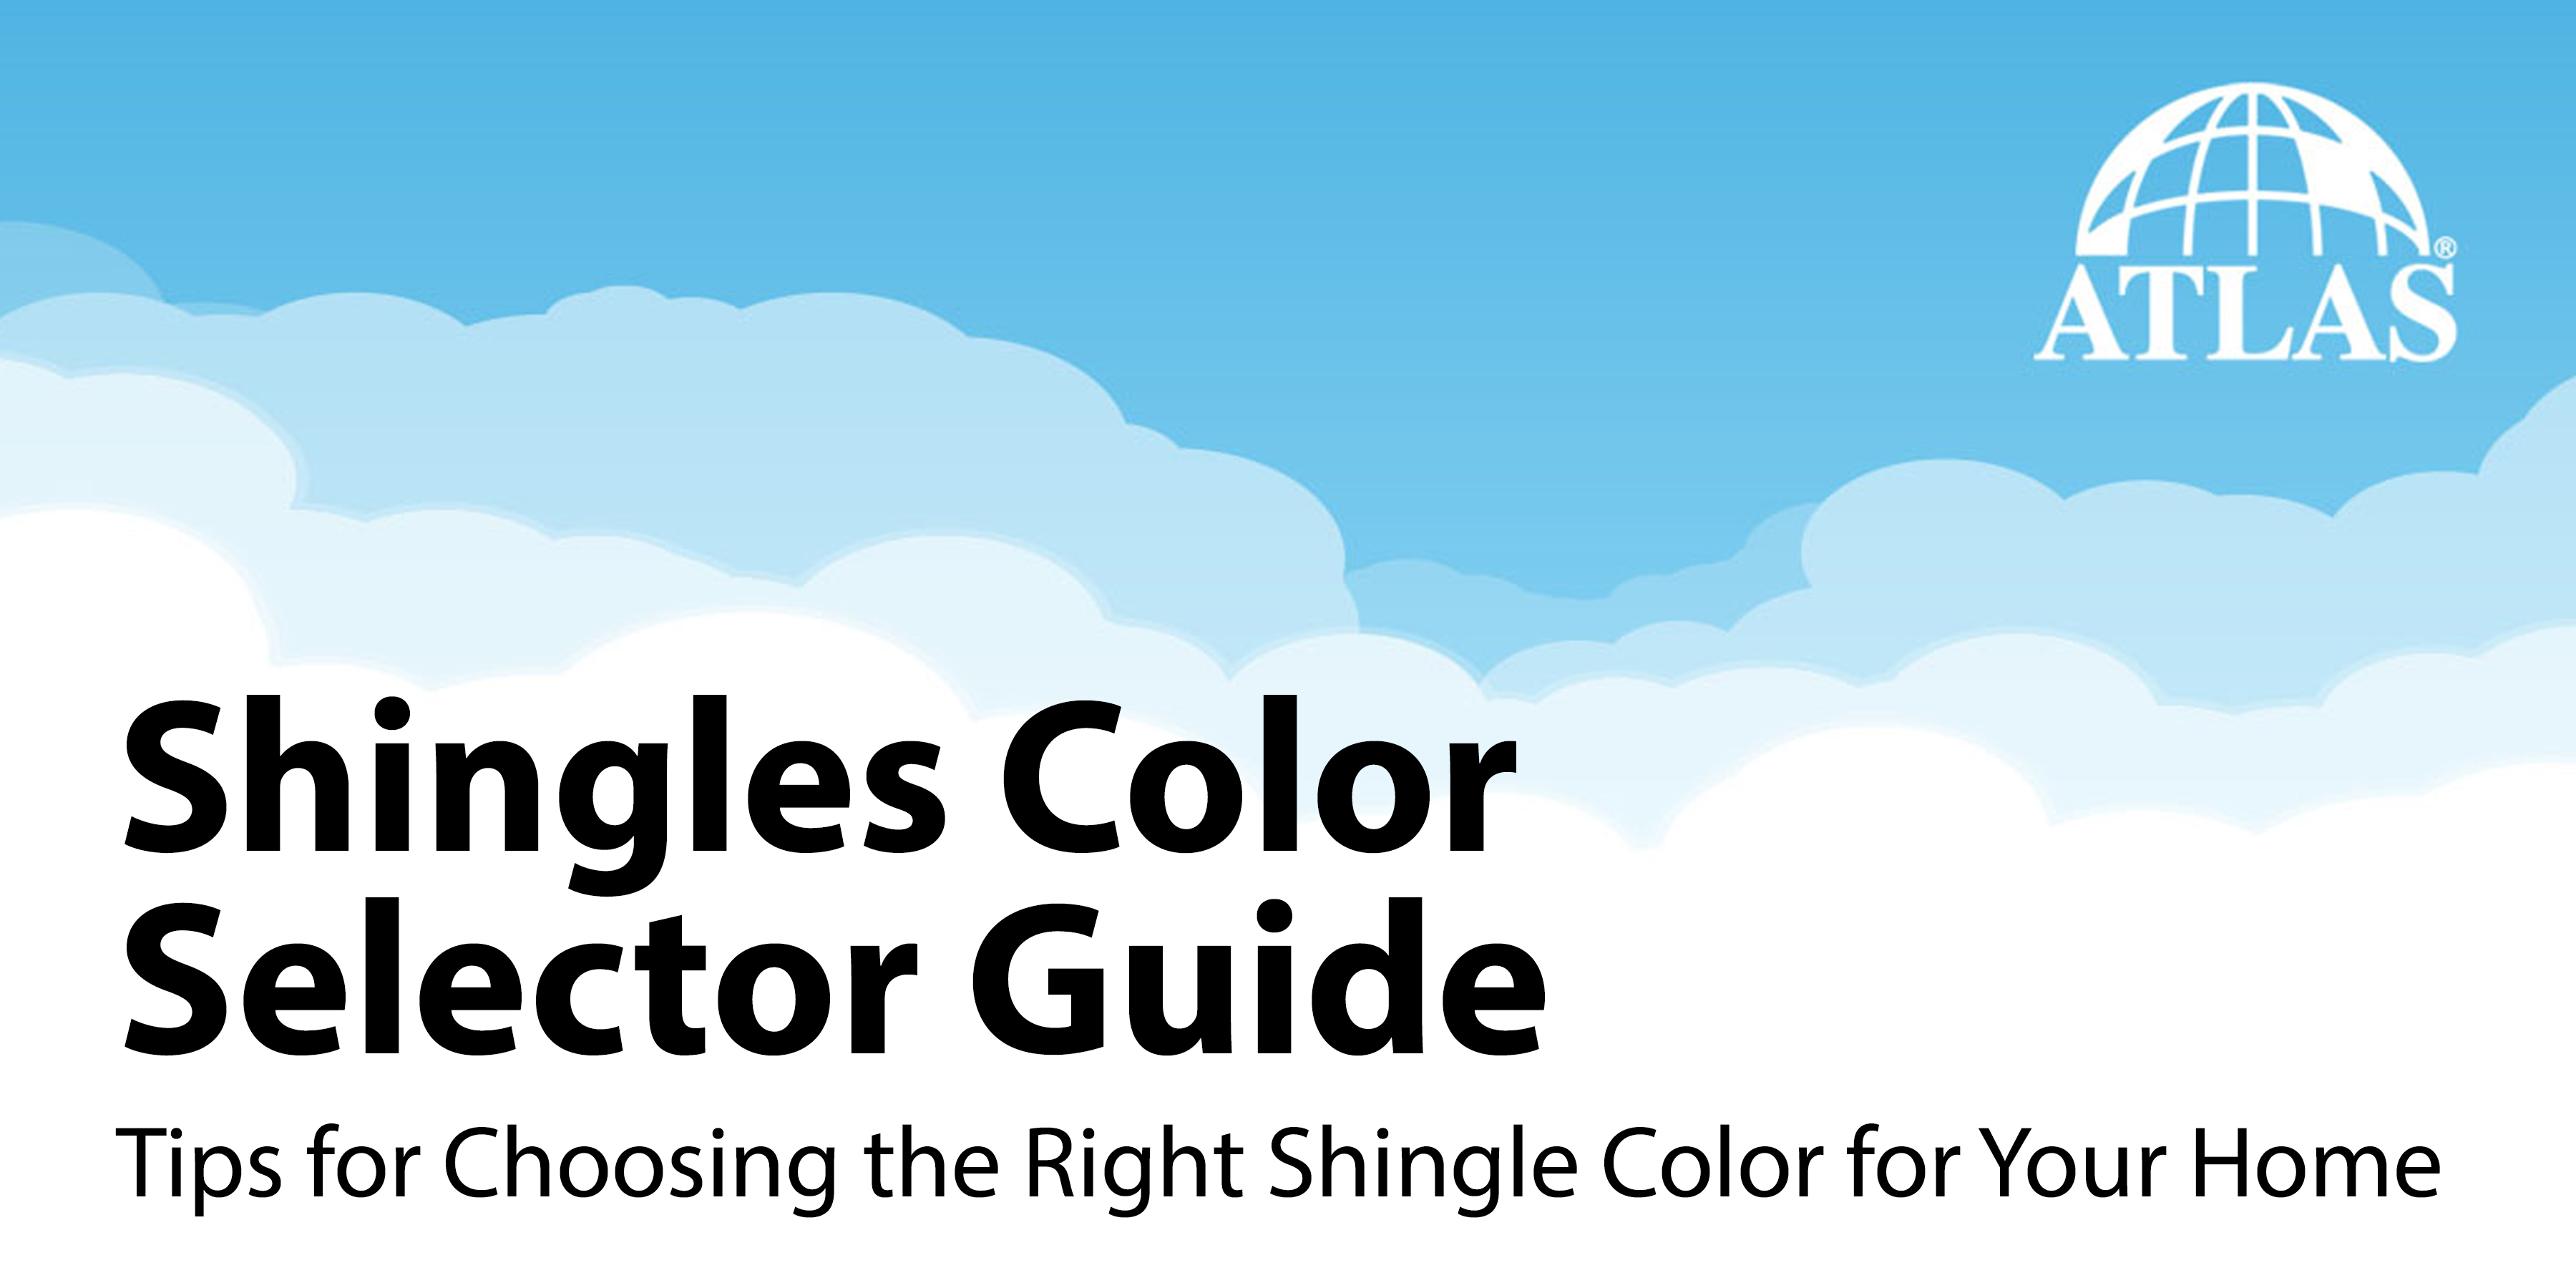 Shingles Color Selector Guide graphic